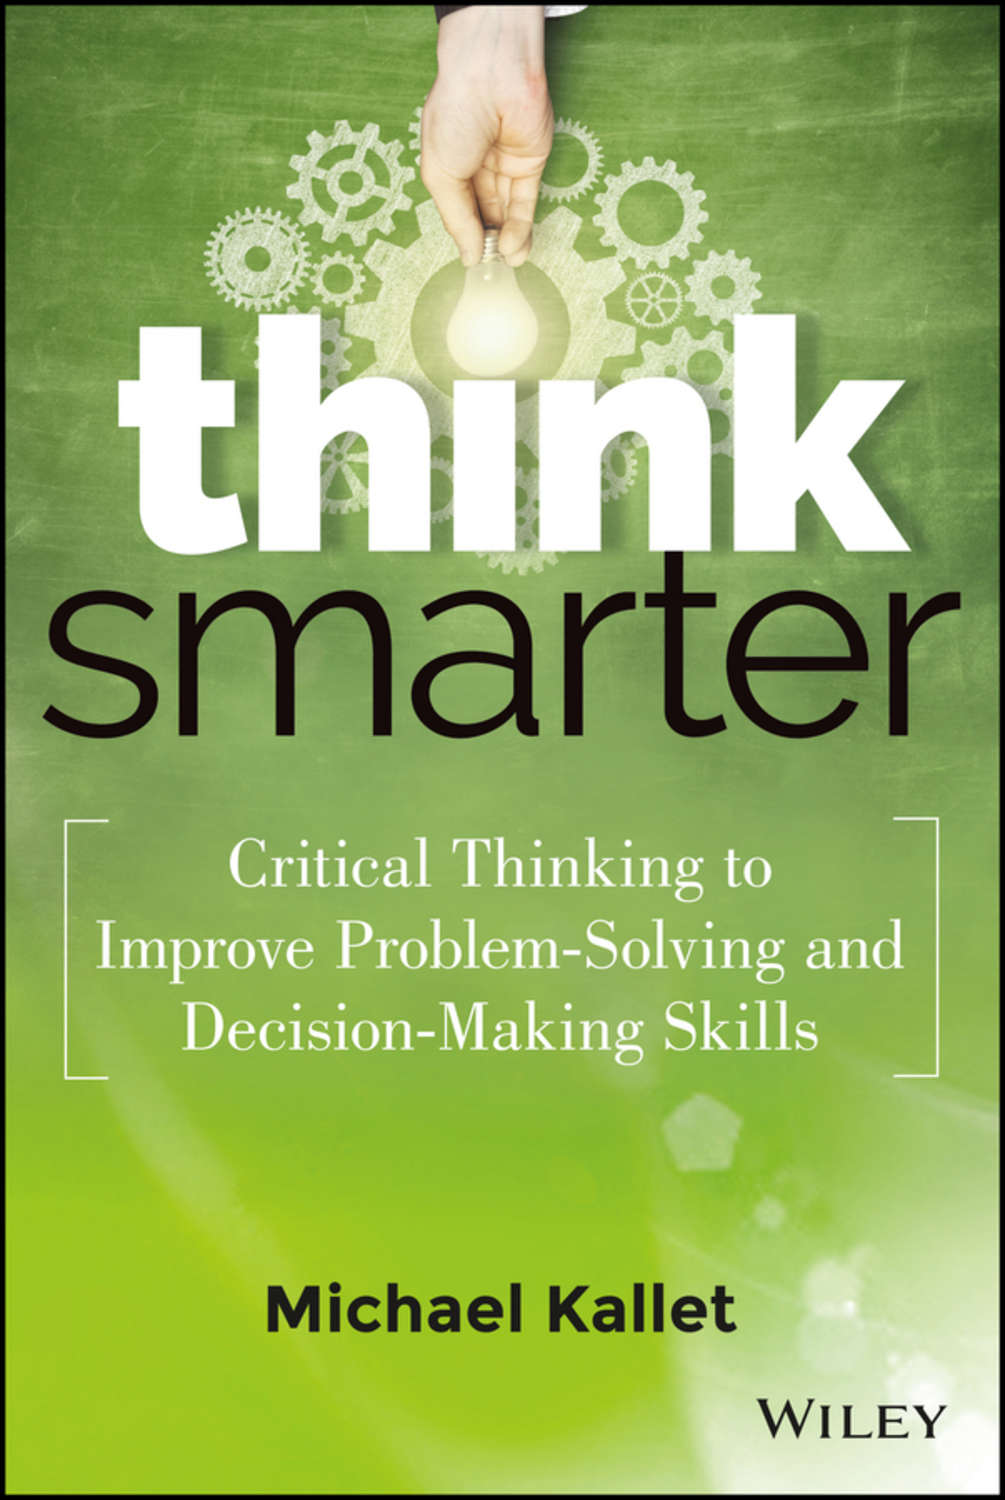 kallet's critical thinking framework